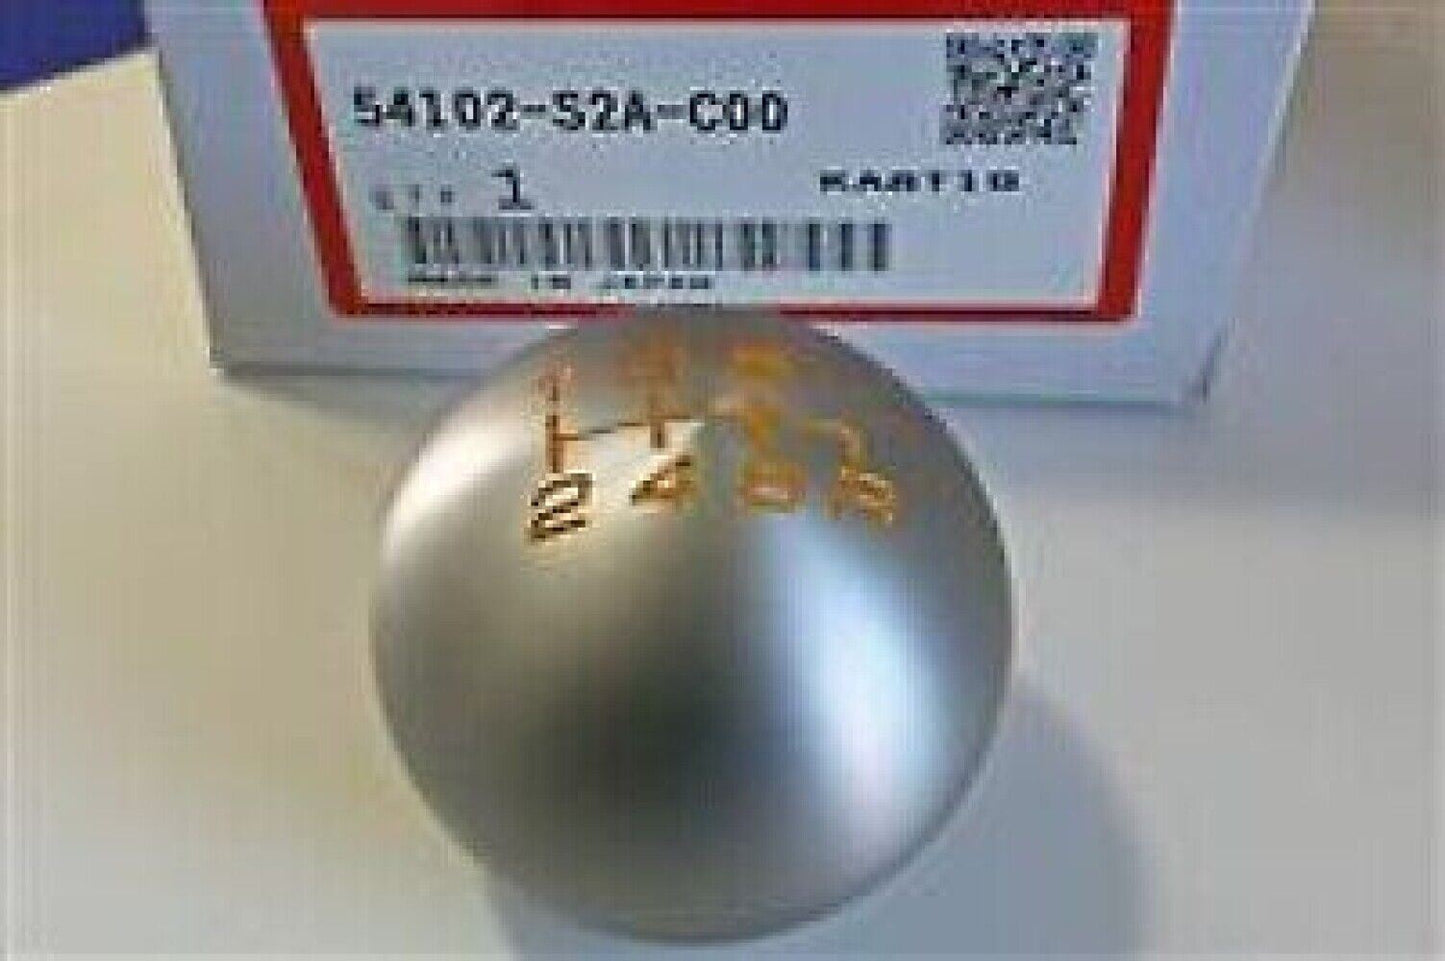 HONDA Genuine S2000 CR Shift Knob Yellow Lettering 54102-S2A-C00